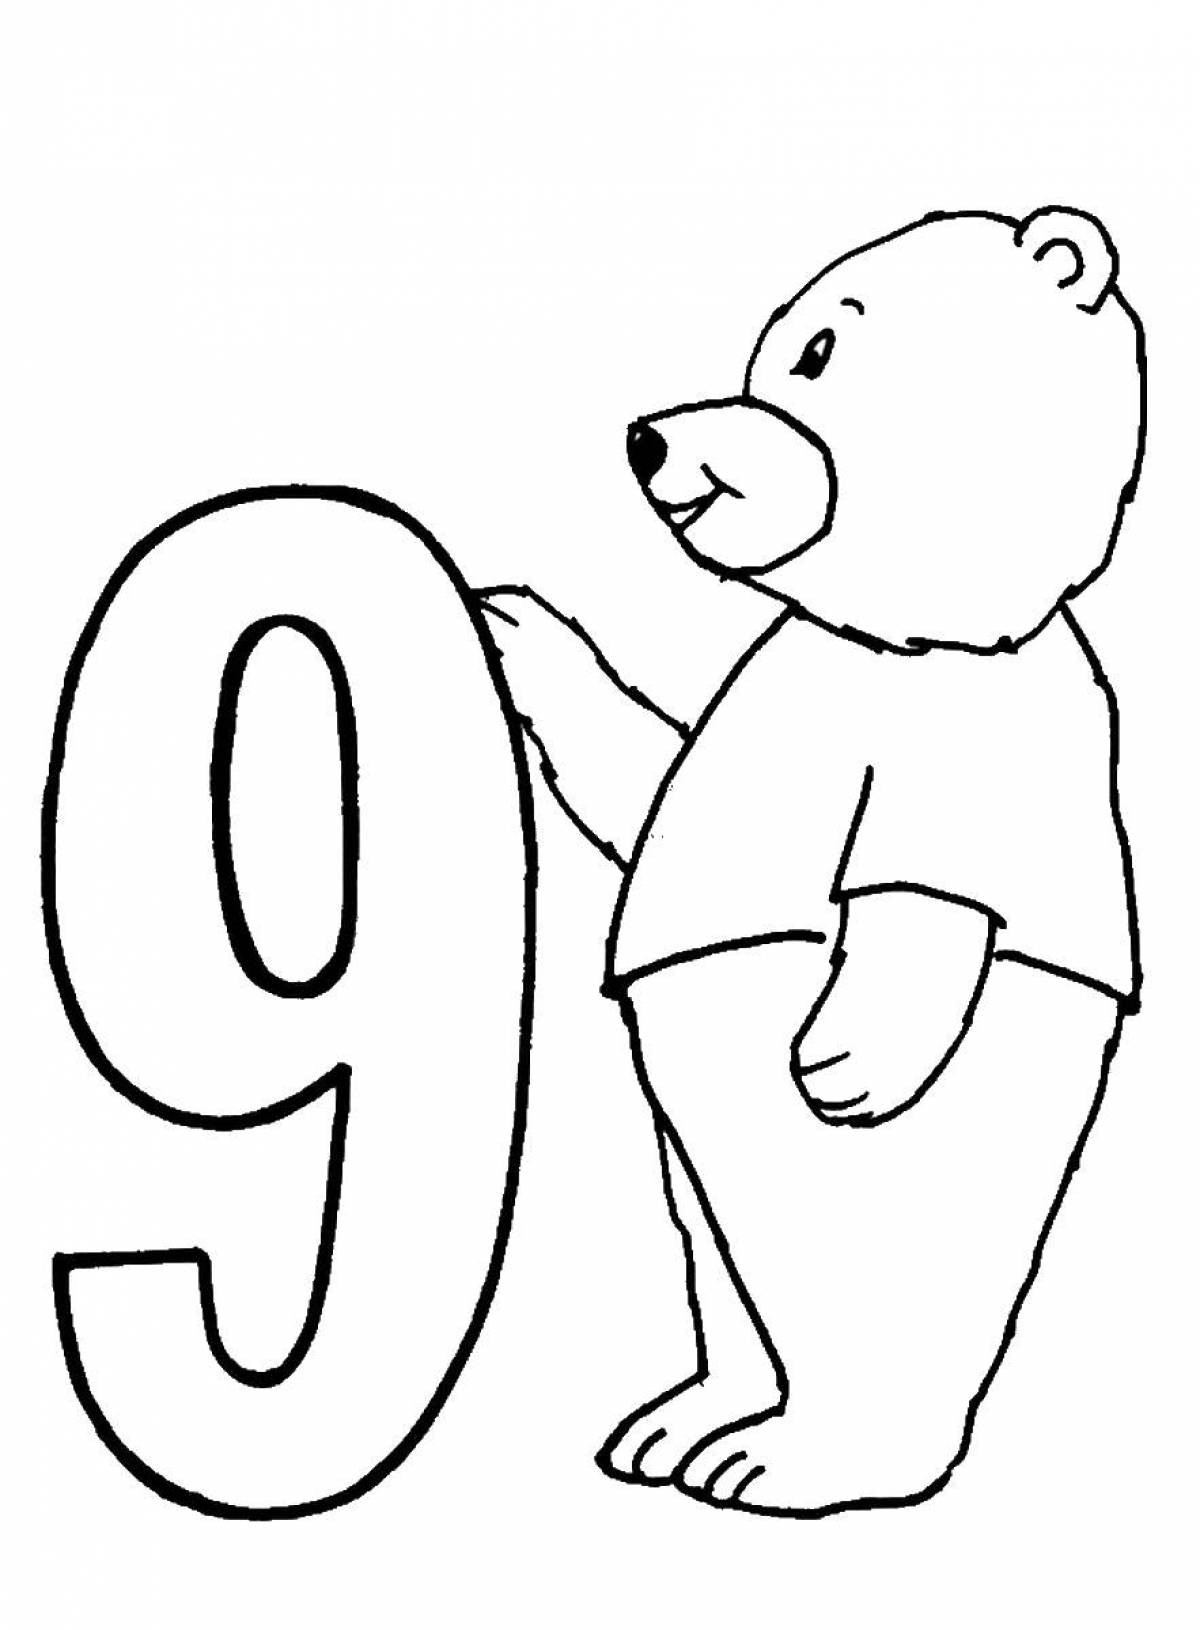 9 картинка раскраска. Раскраска цифры. Цифра 9 раскраска. Цифра 9 раскраска для детей. Цифры раскраска для детей.